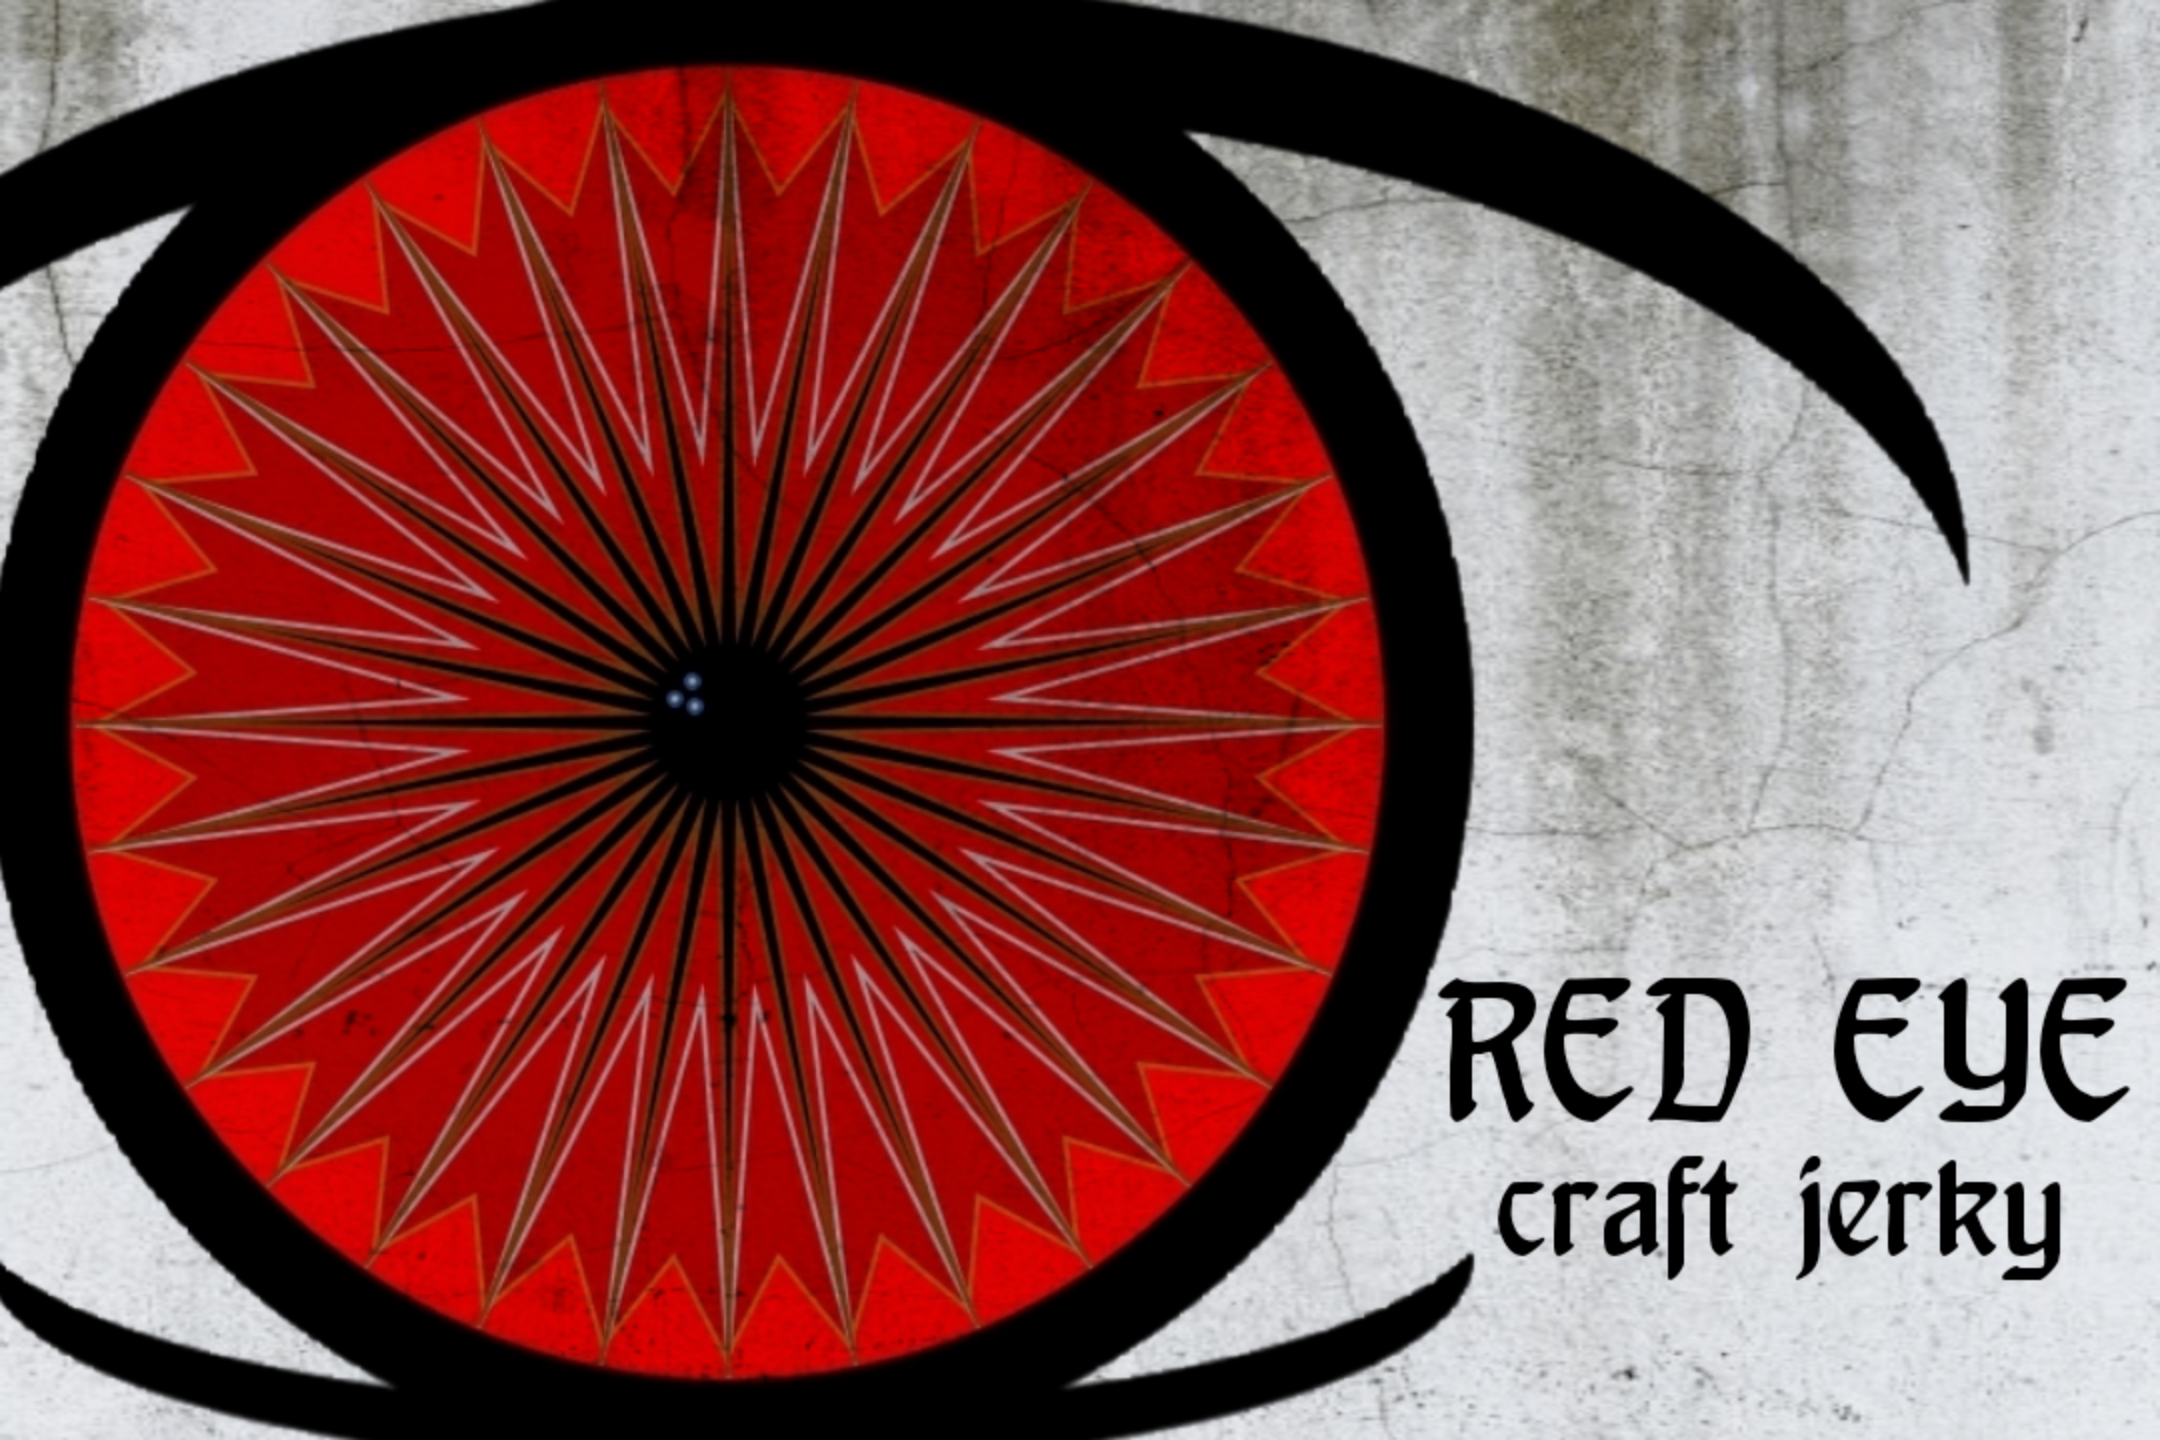 Red Eye Craft Jerky